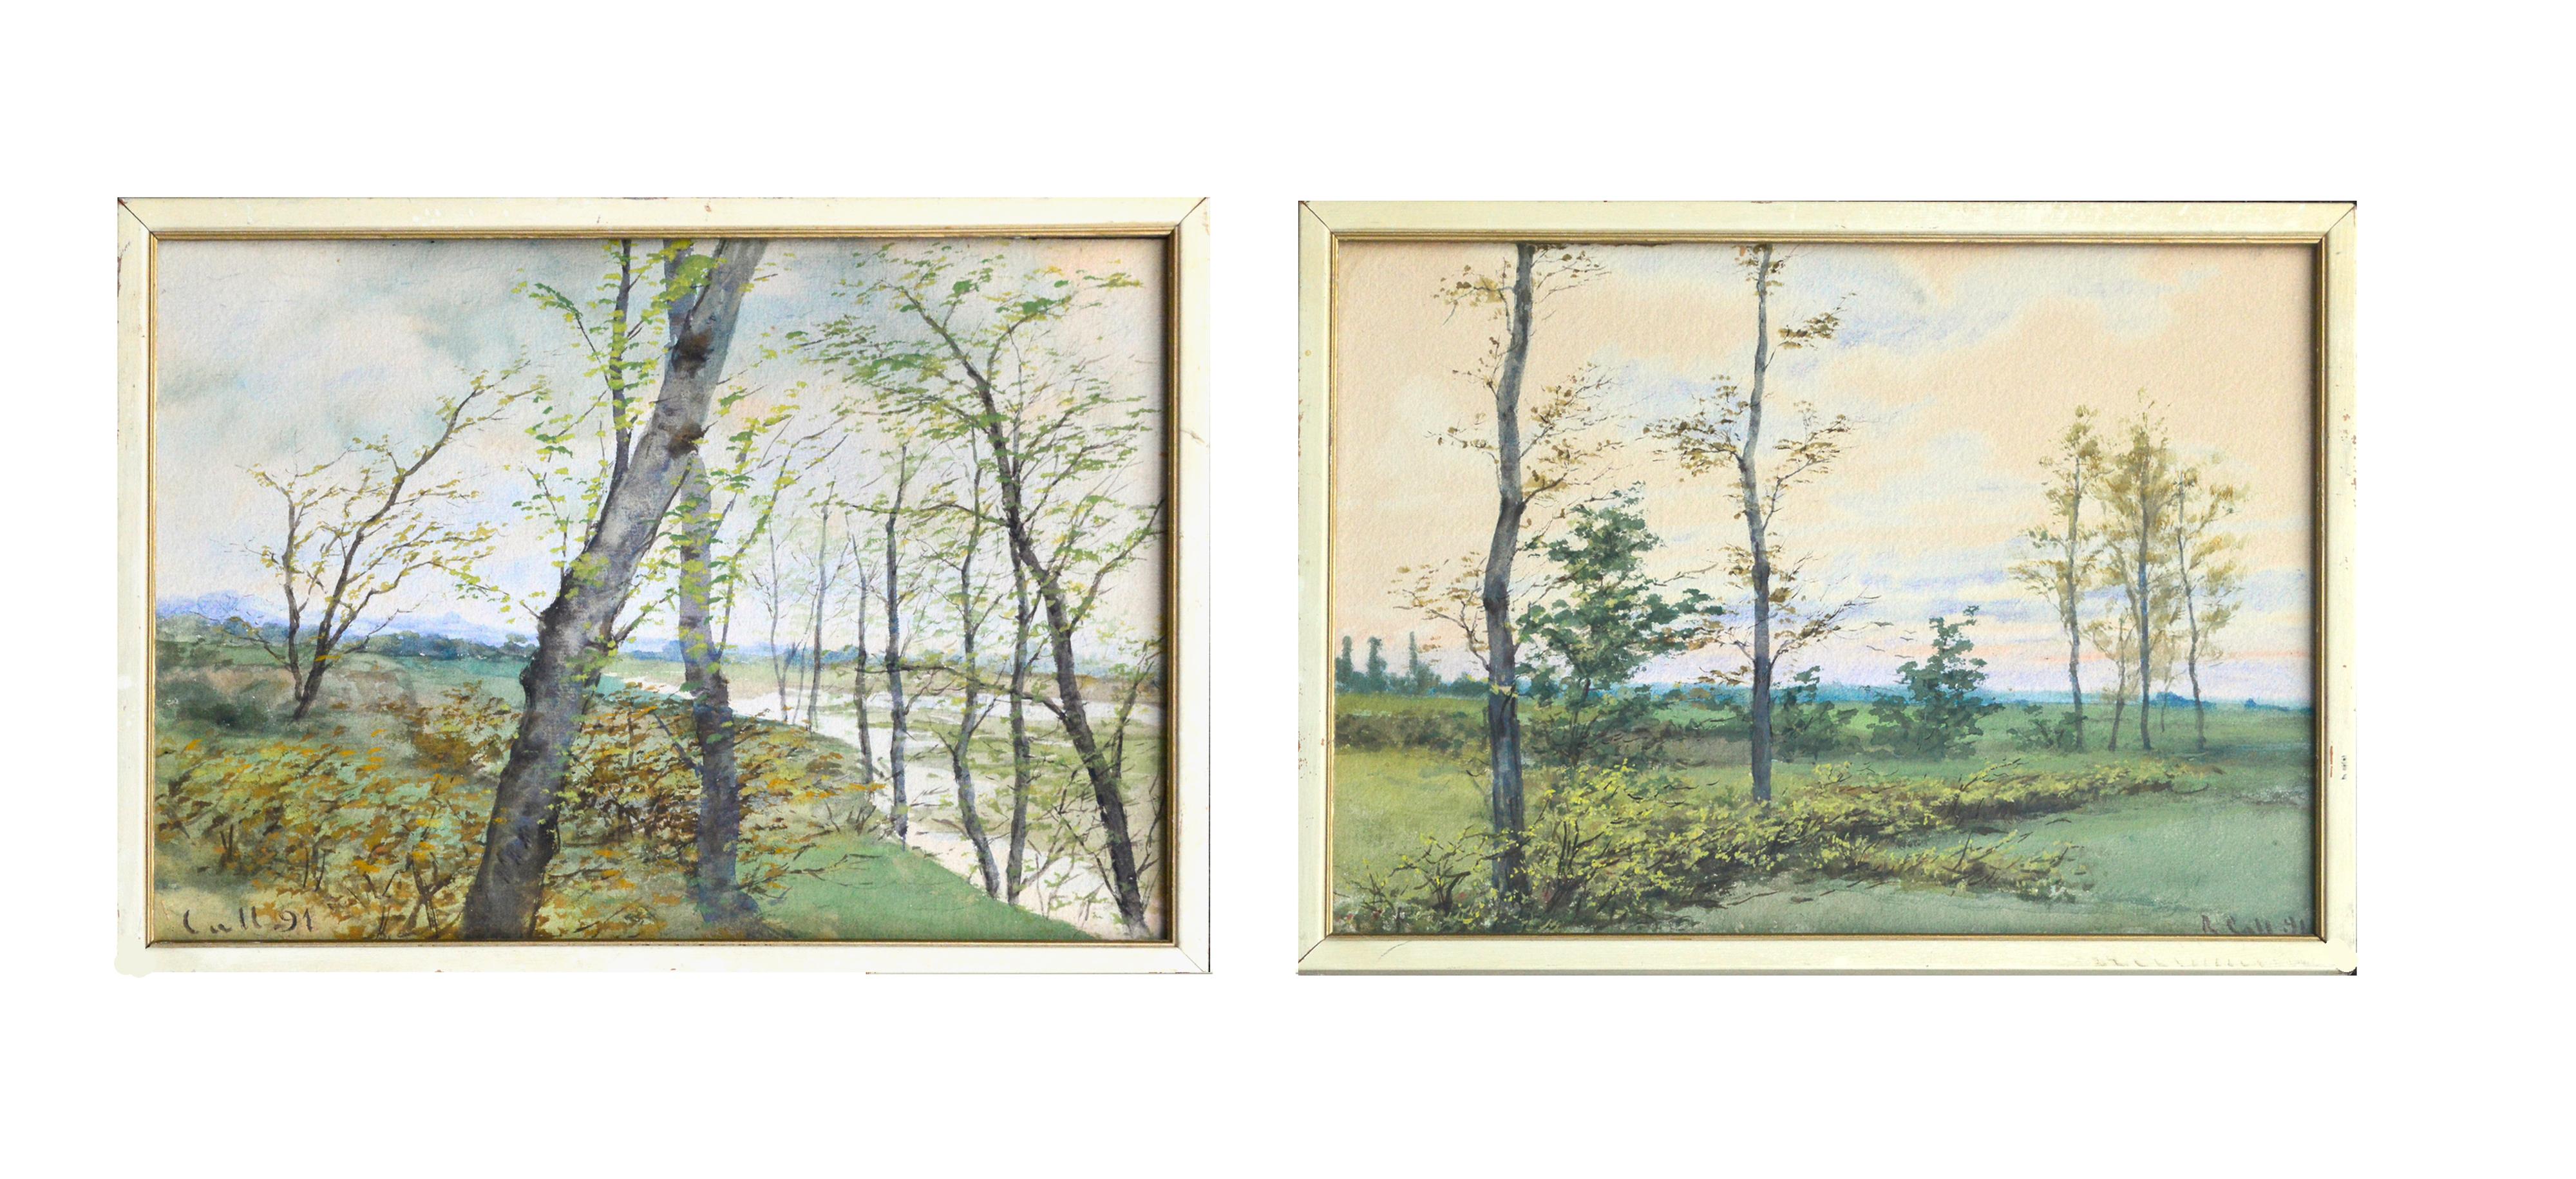 Ramon Call  Landscape Art - Late 19th C. River Birch Trees Landscape Pair